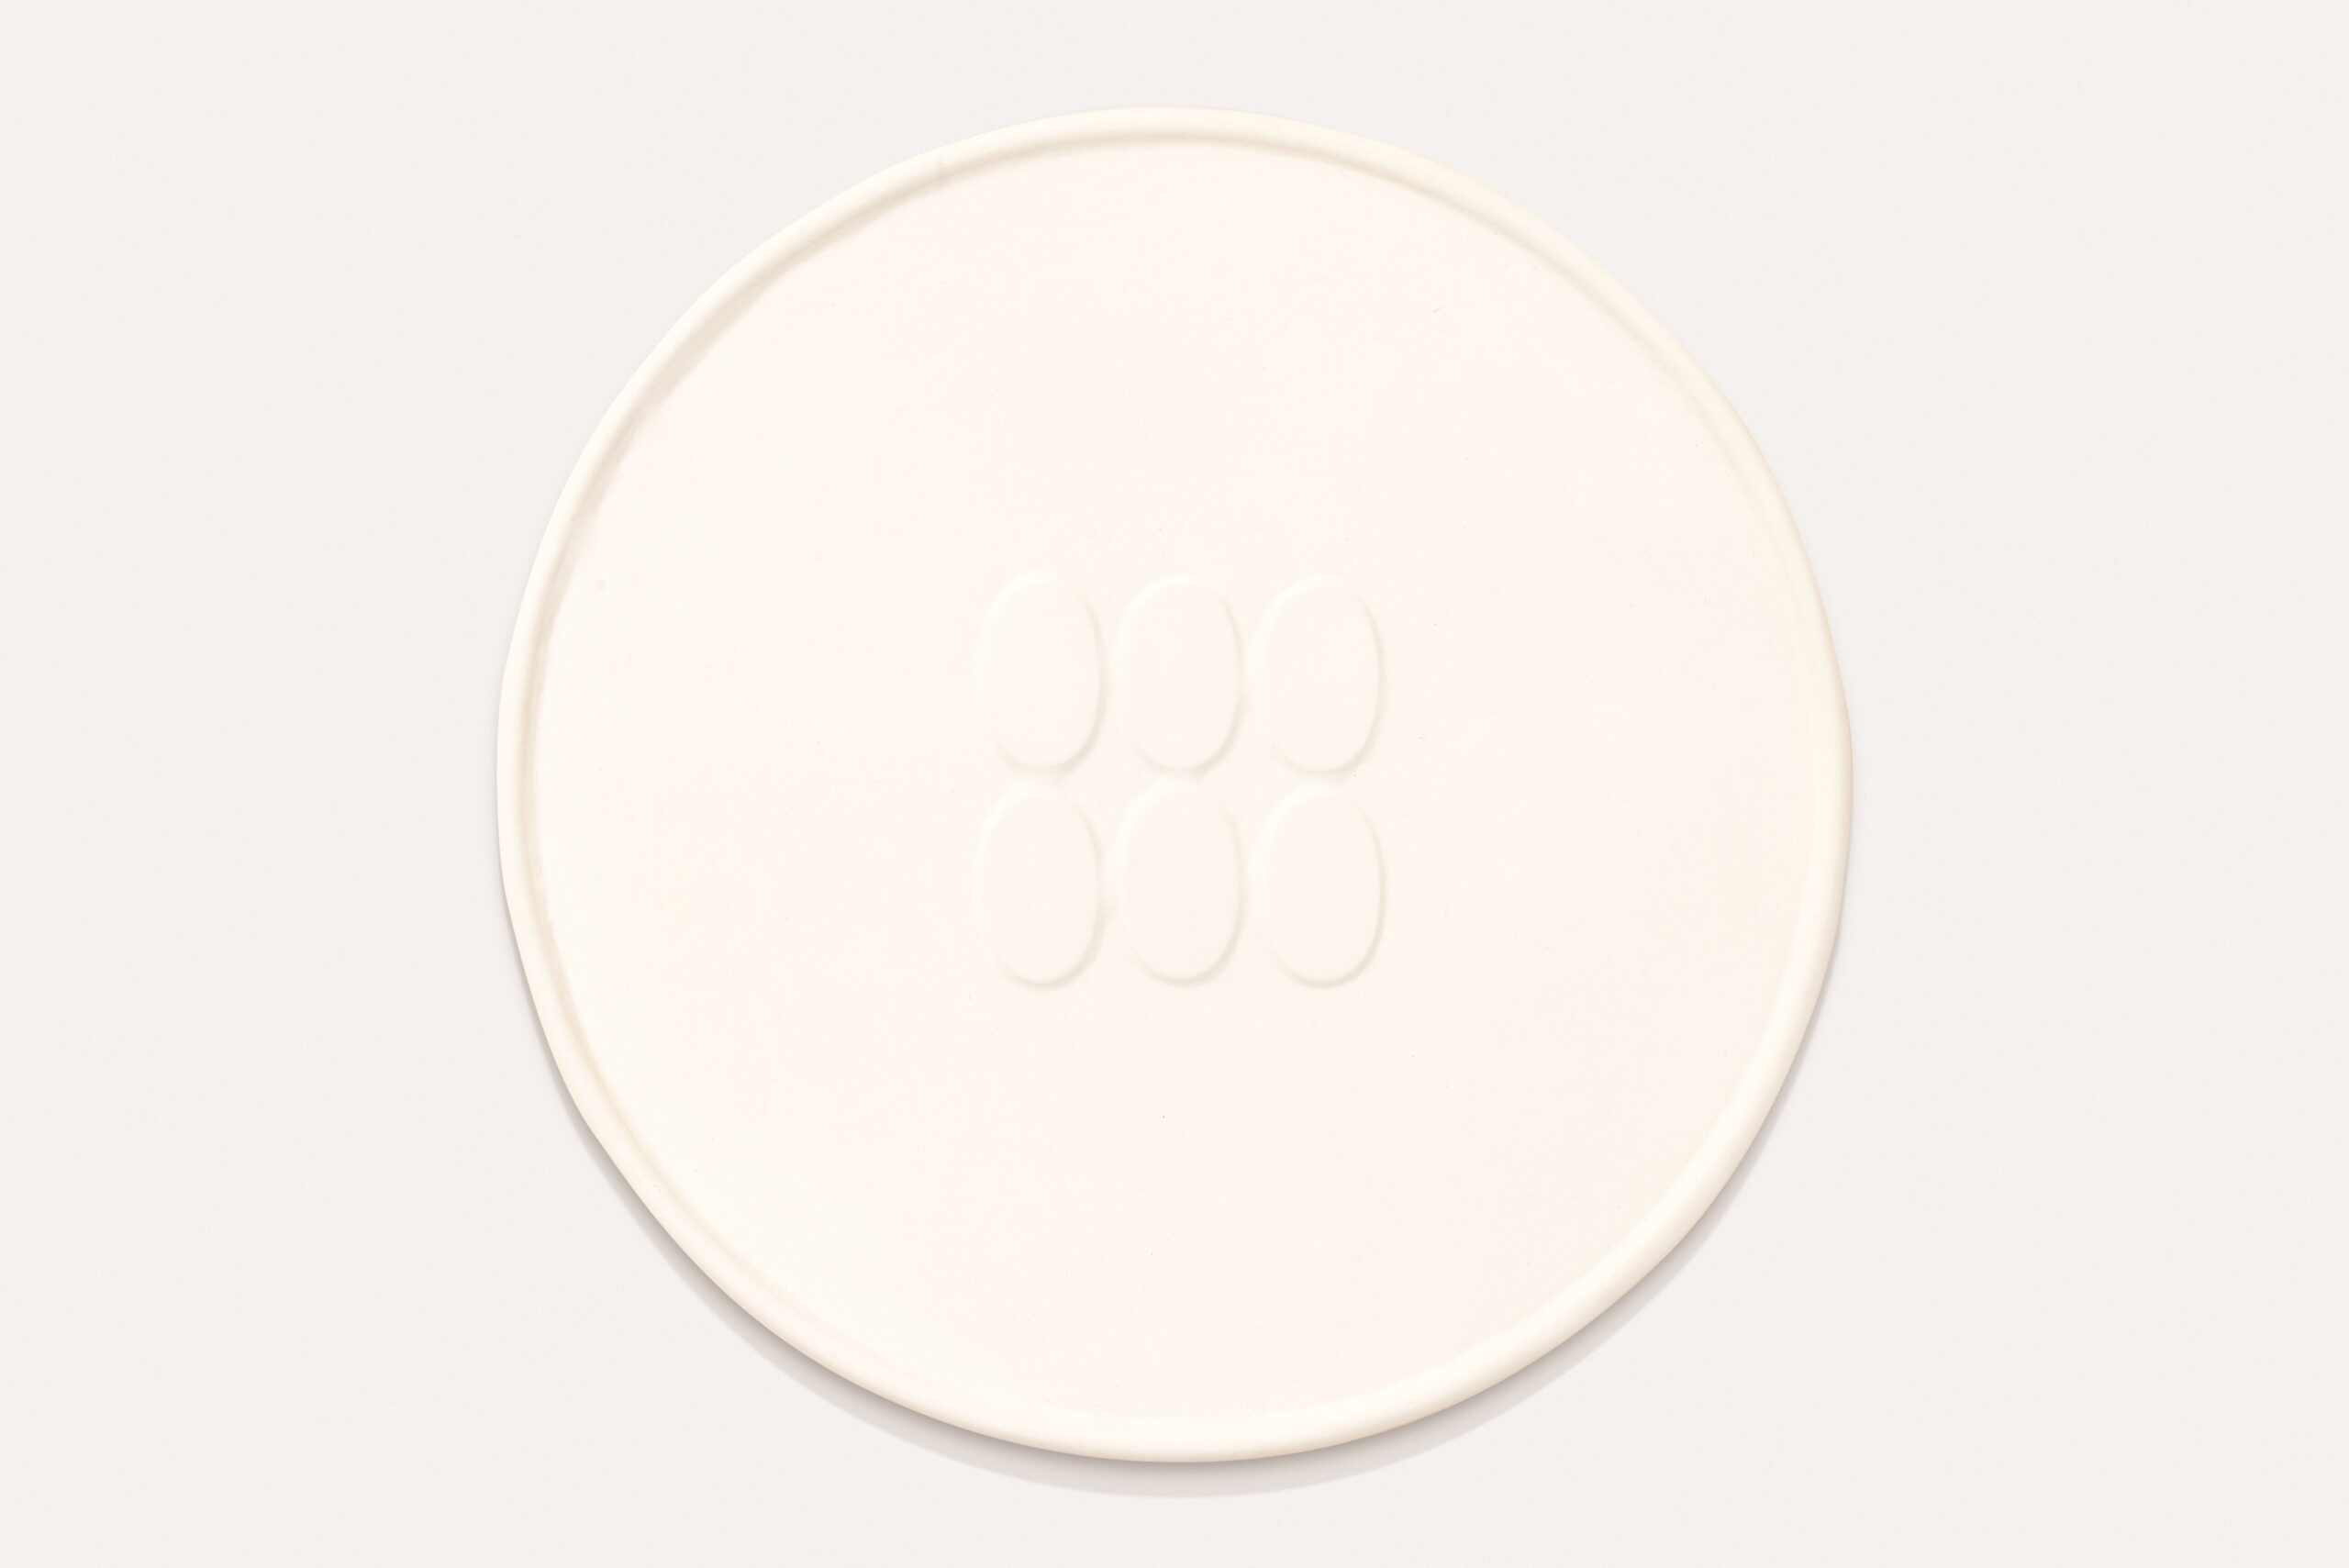 Turi Simeti, 6 ovali bianchi, acrilico su tela,1966,